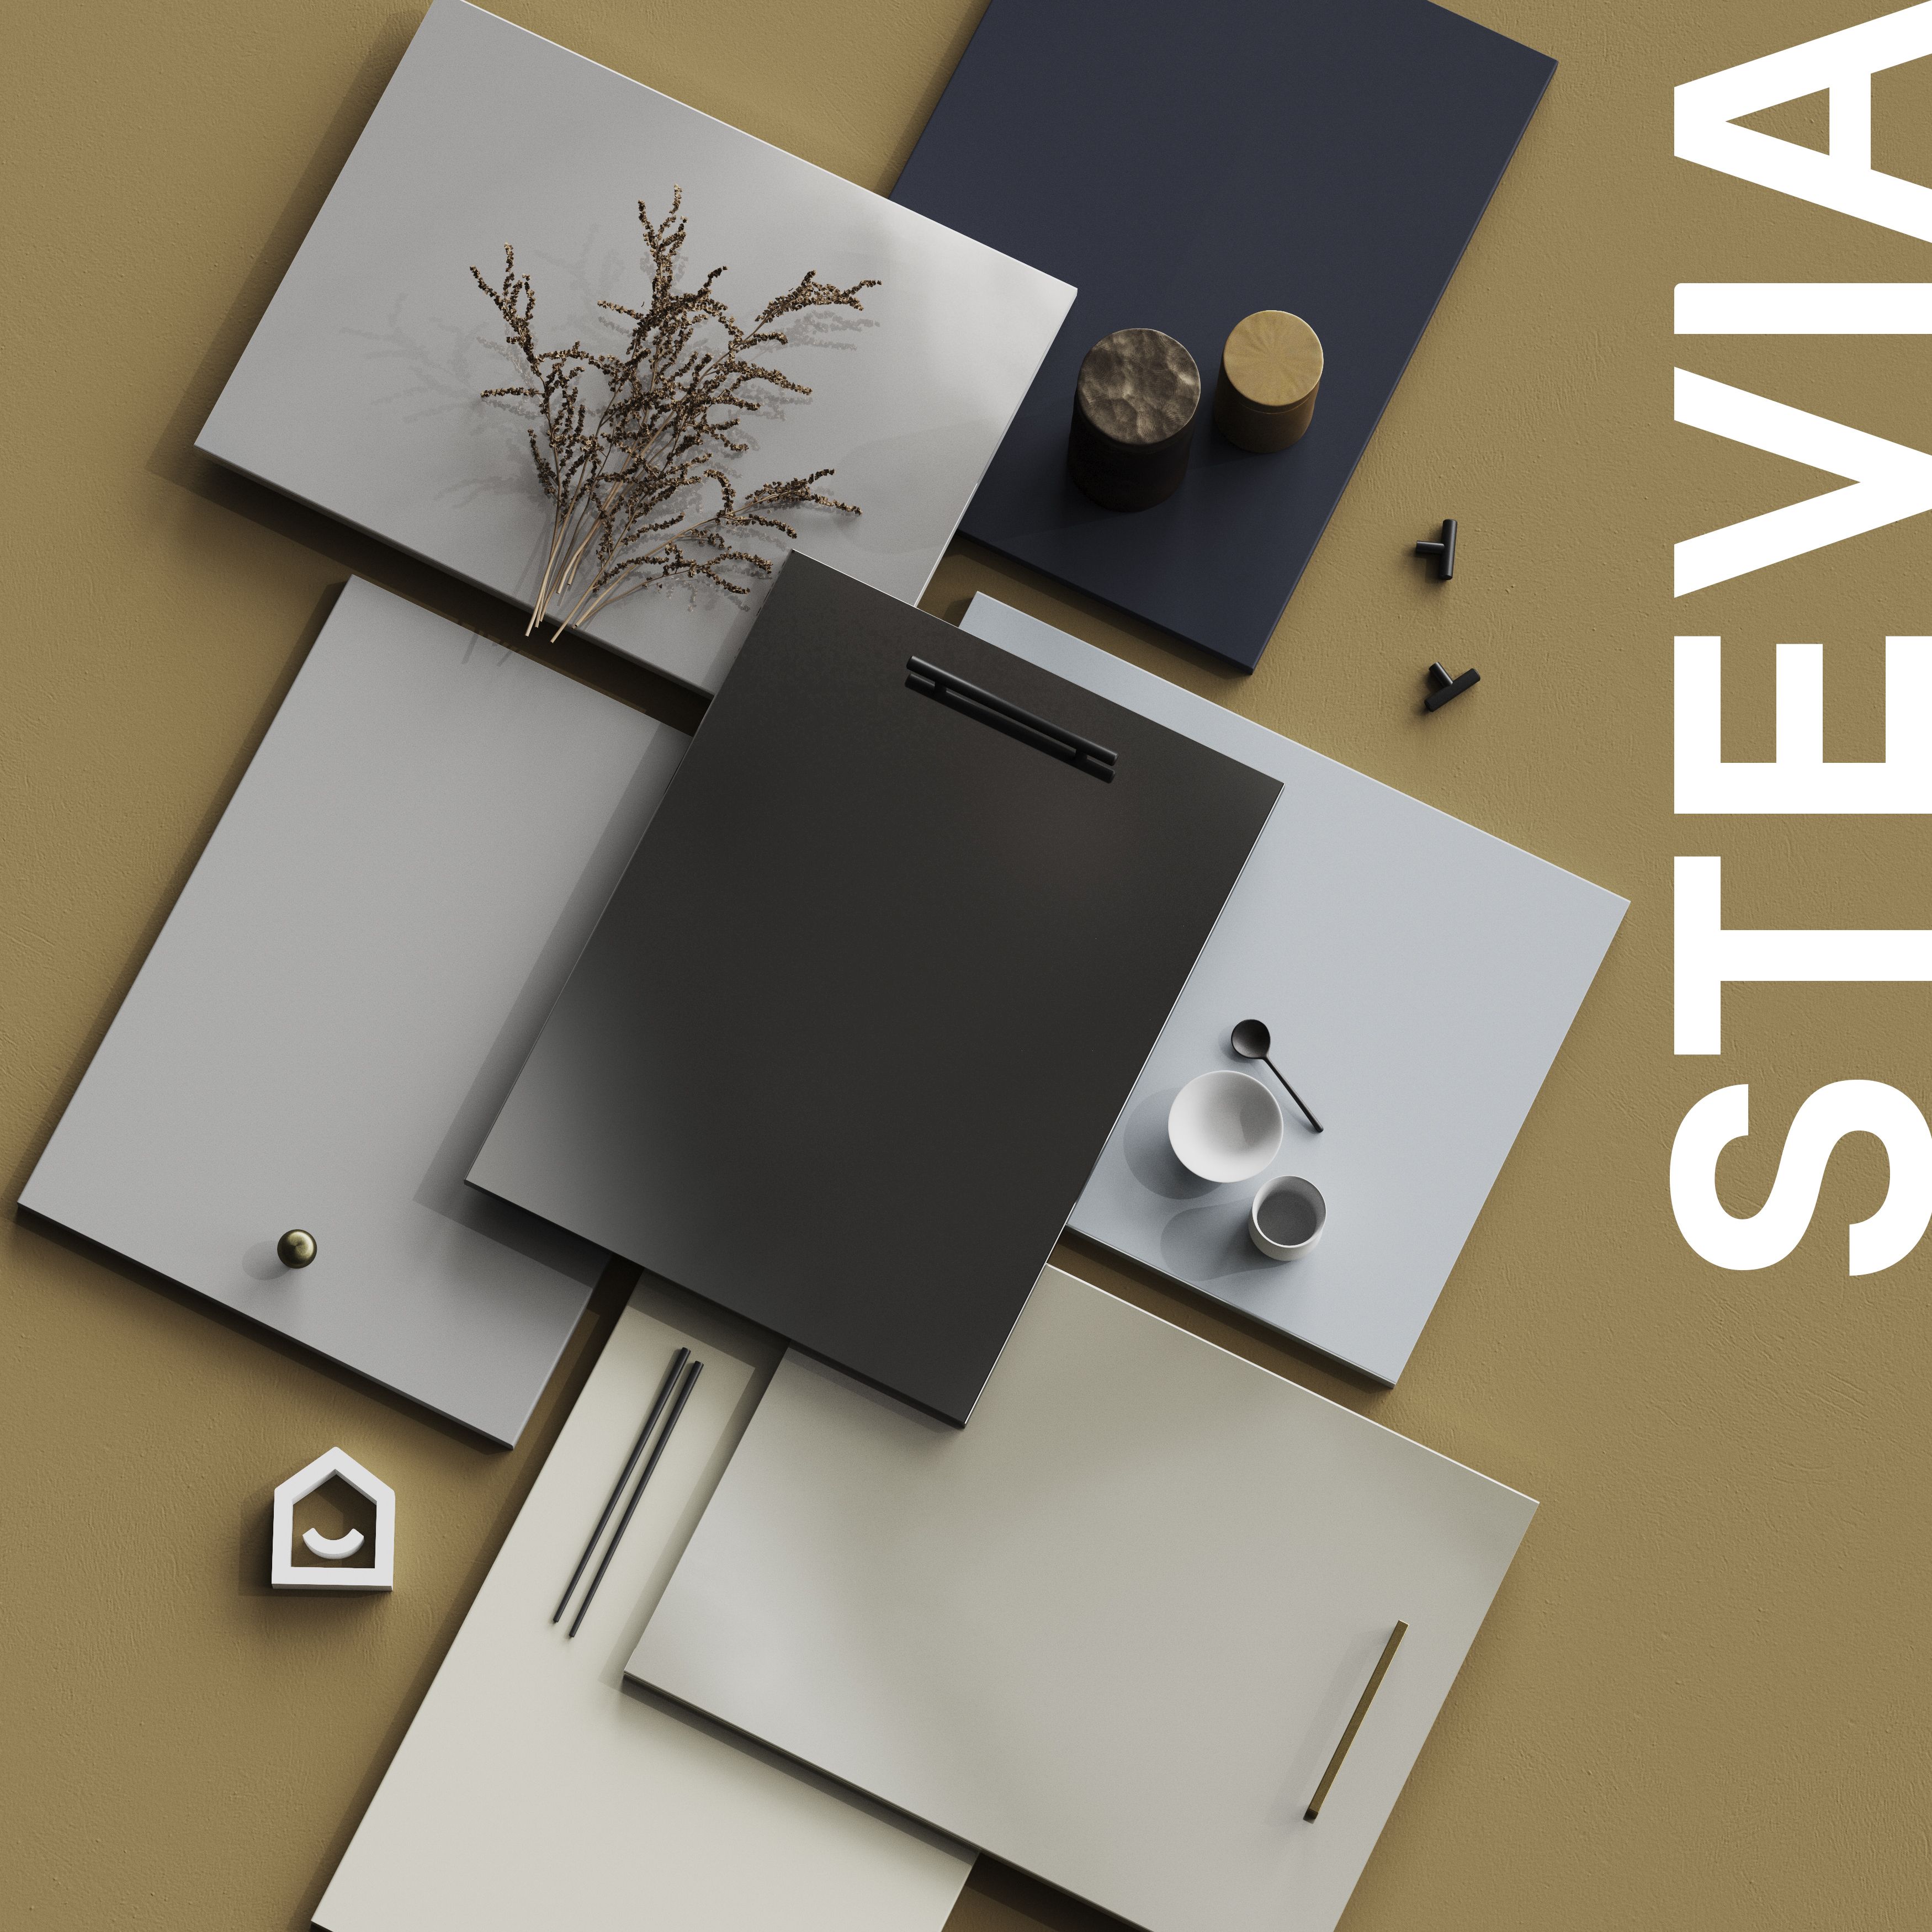 GoodHome Stevia Innovo handleless gloss light grey slab Drawer front, bridging door & bi fold door, (W)400mm (H)340mm (T)18mm